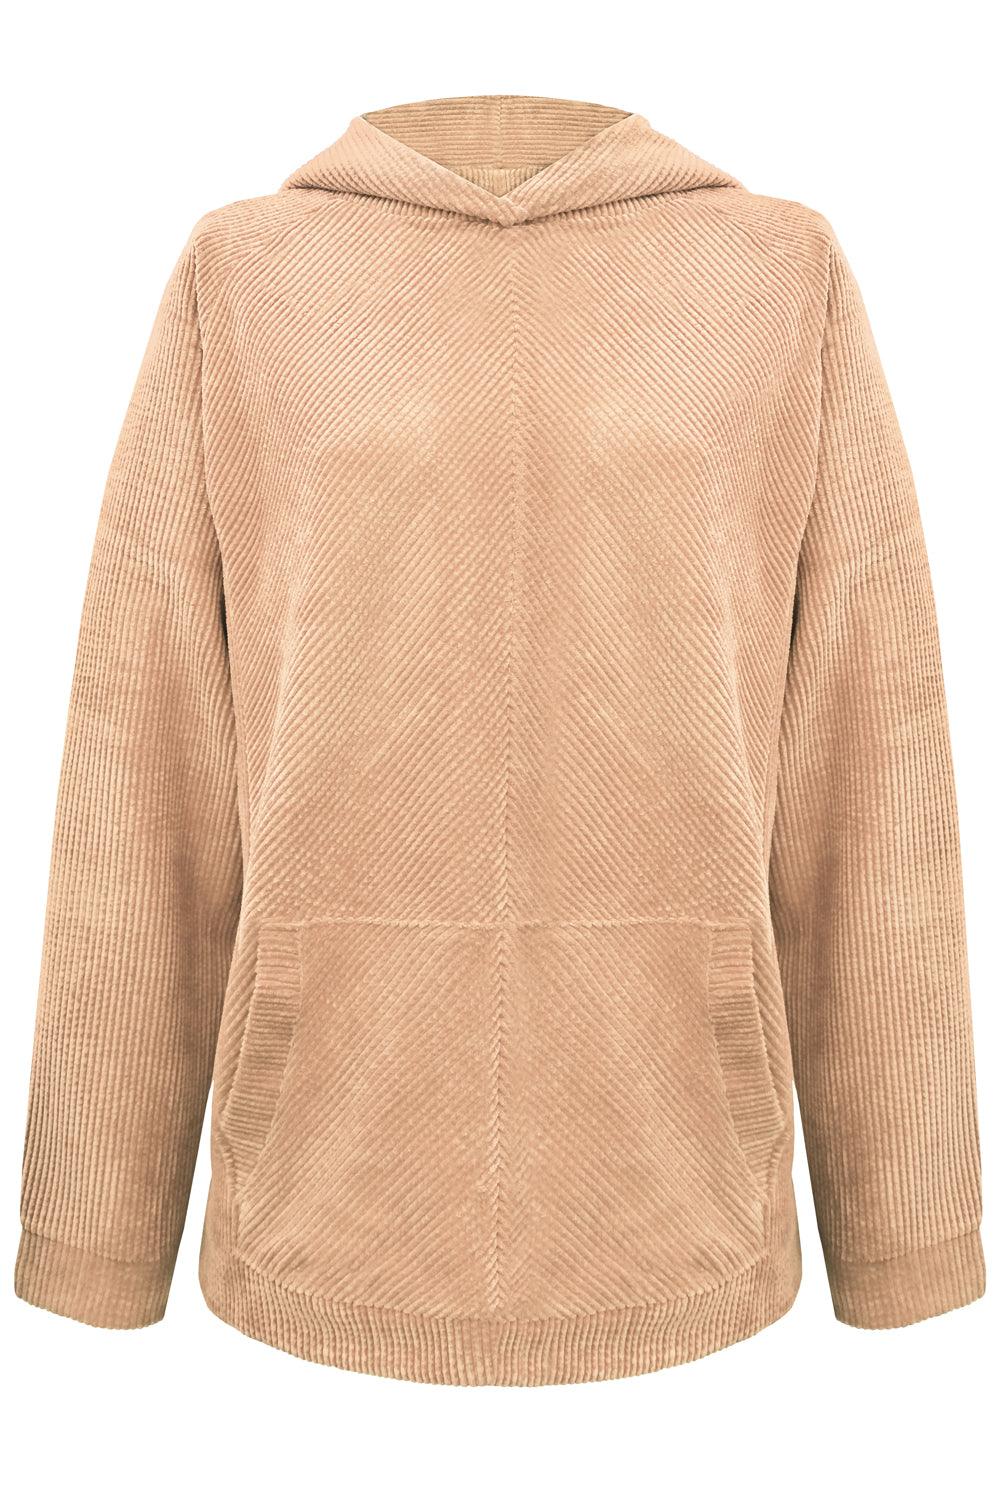 Velveteen Beige hoodie - Sweater by yesUndress. Shop on yesUndress